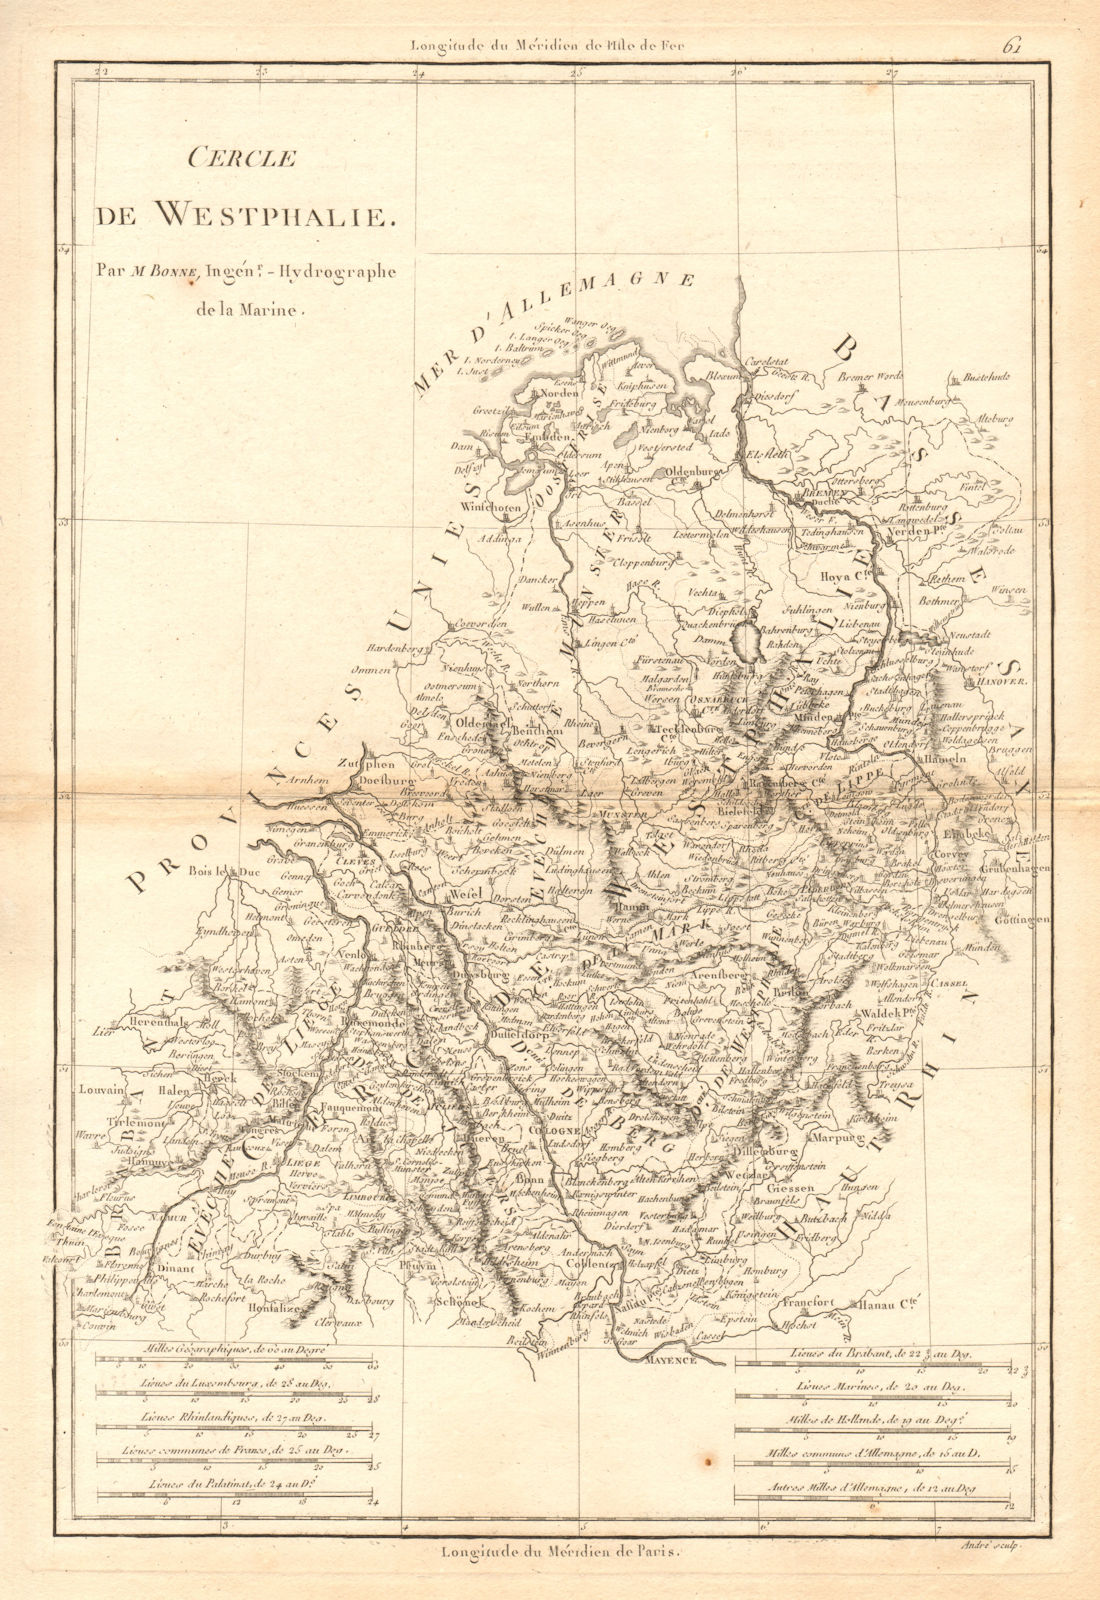 Cercle de Westphalie. Circle of Westphalia. North-west Germany. BONNE 1787 map